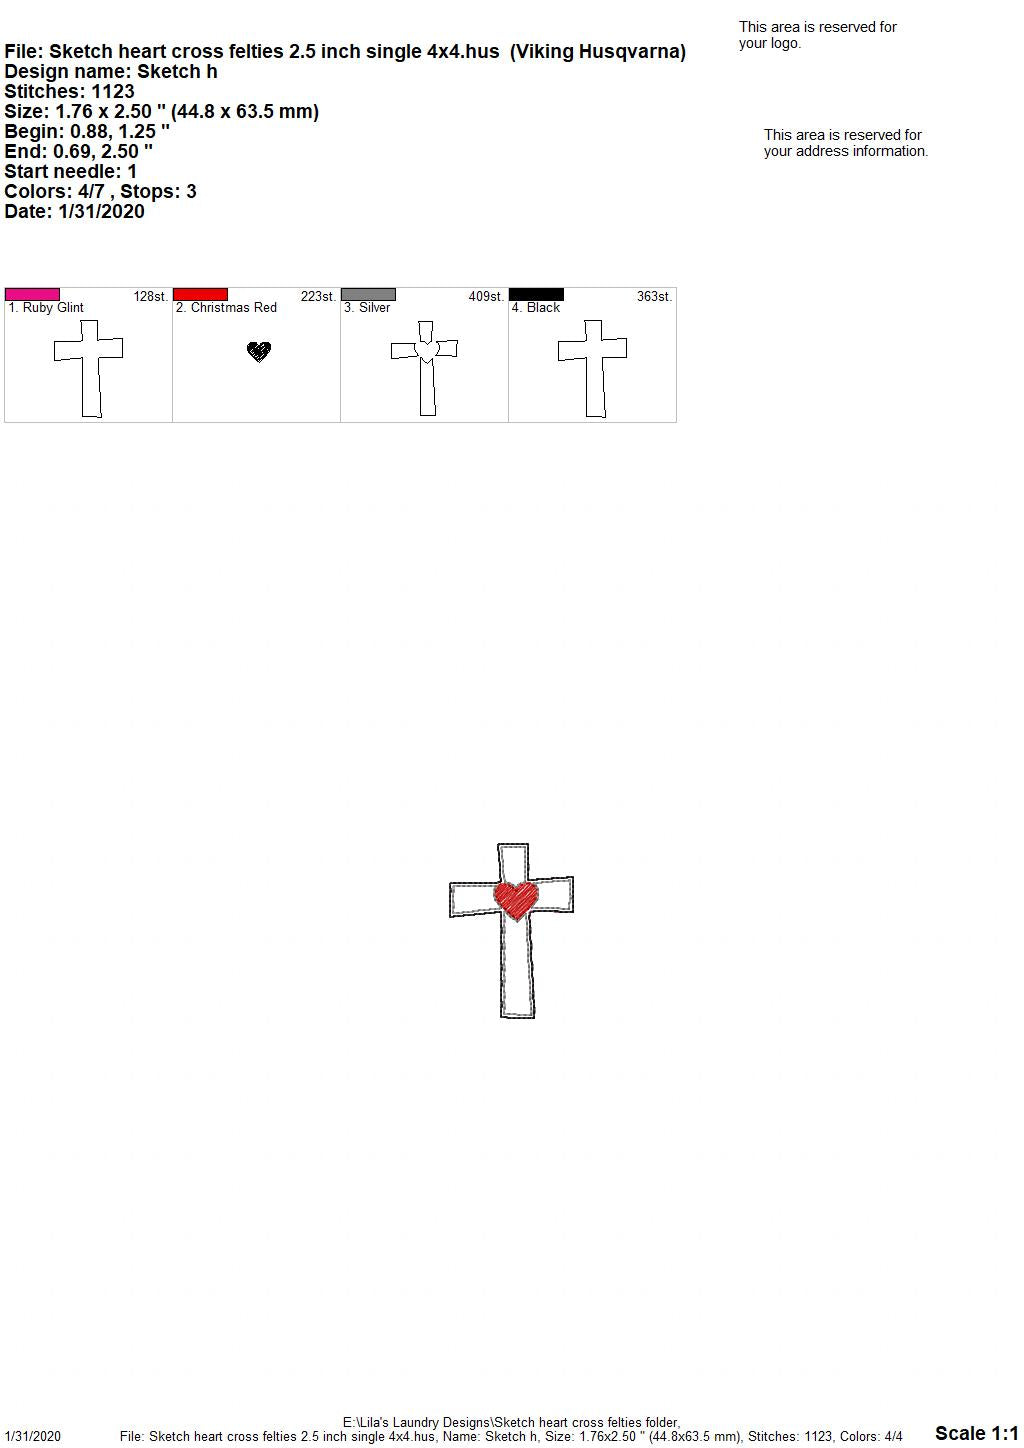 Sketch Cross Heart Felties - 5 sizes - Digital Embroidery Design